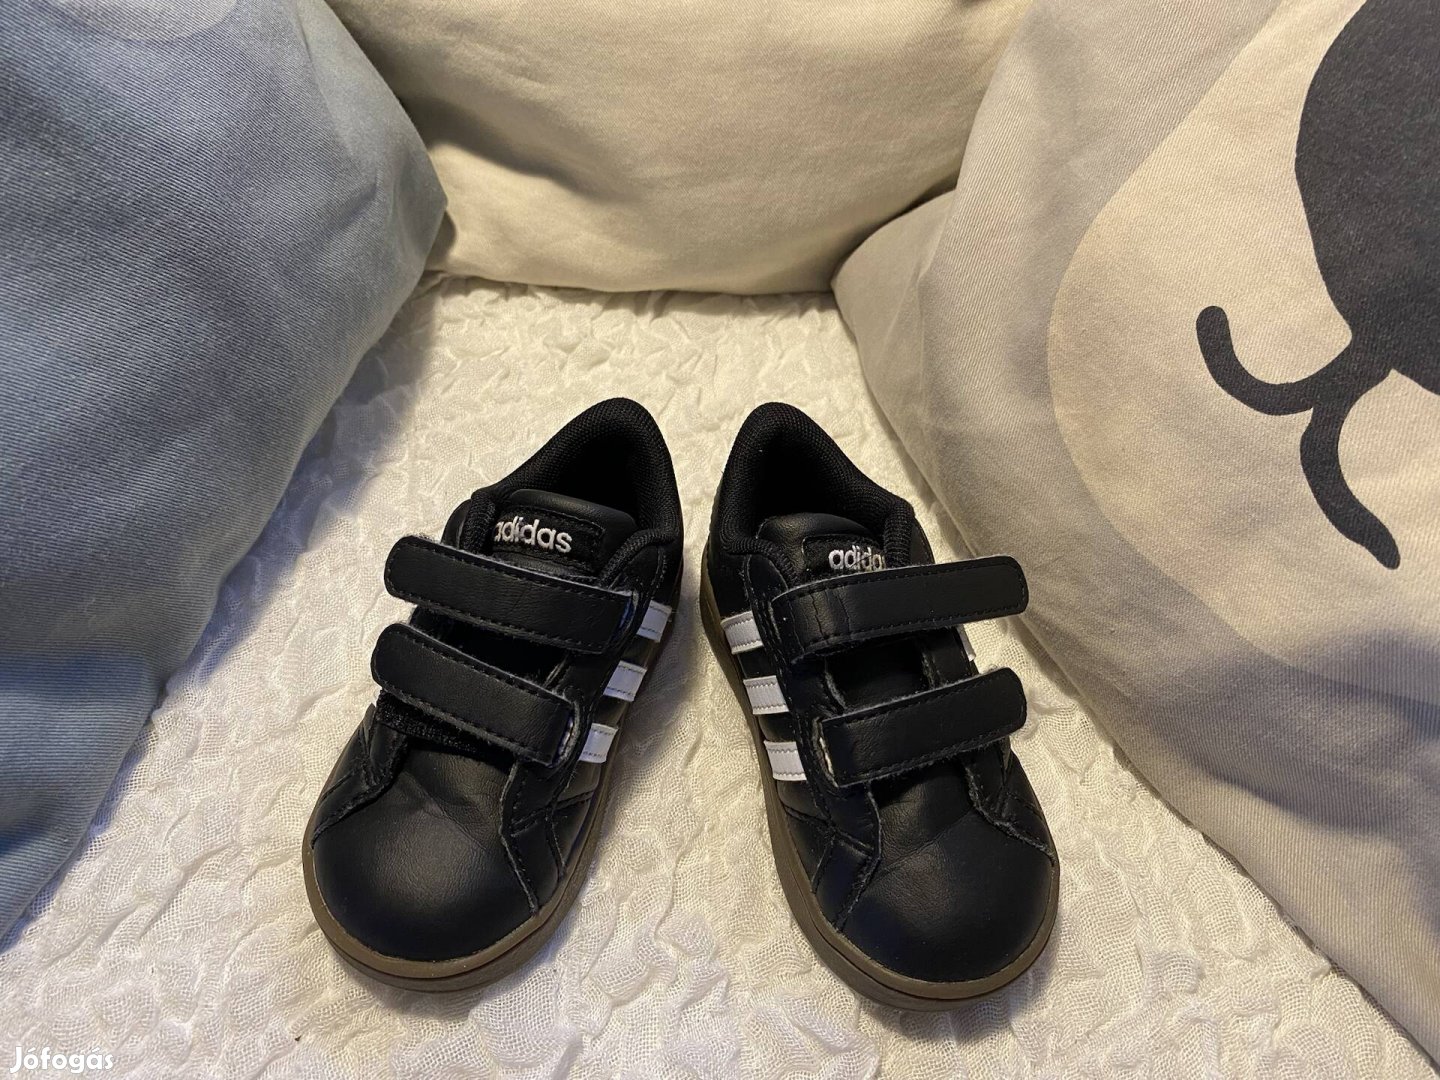 Adidas kisfiú cipő 22 méret 